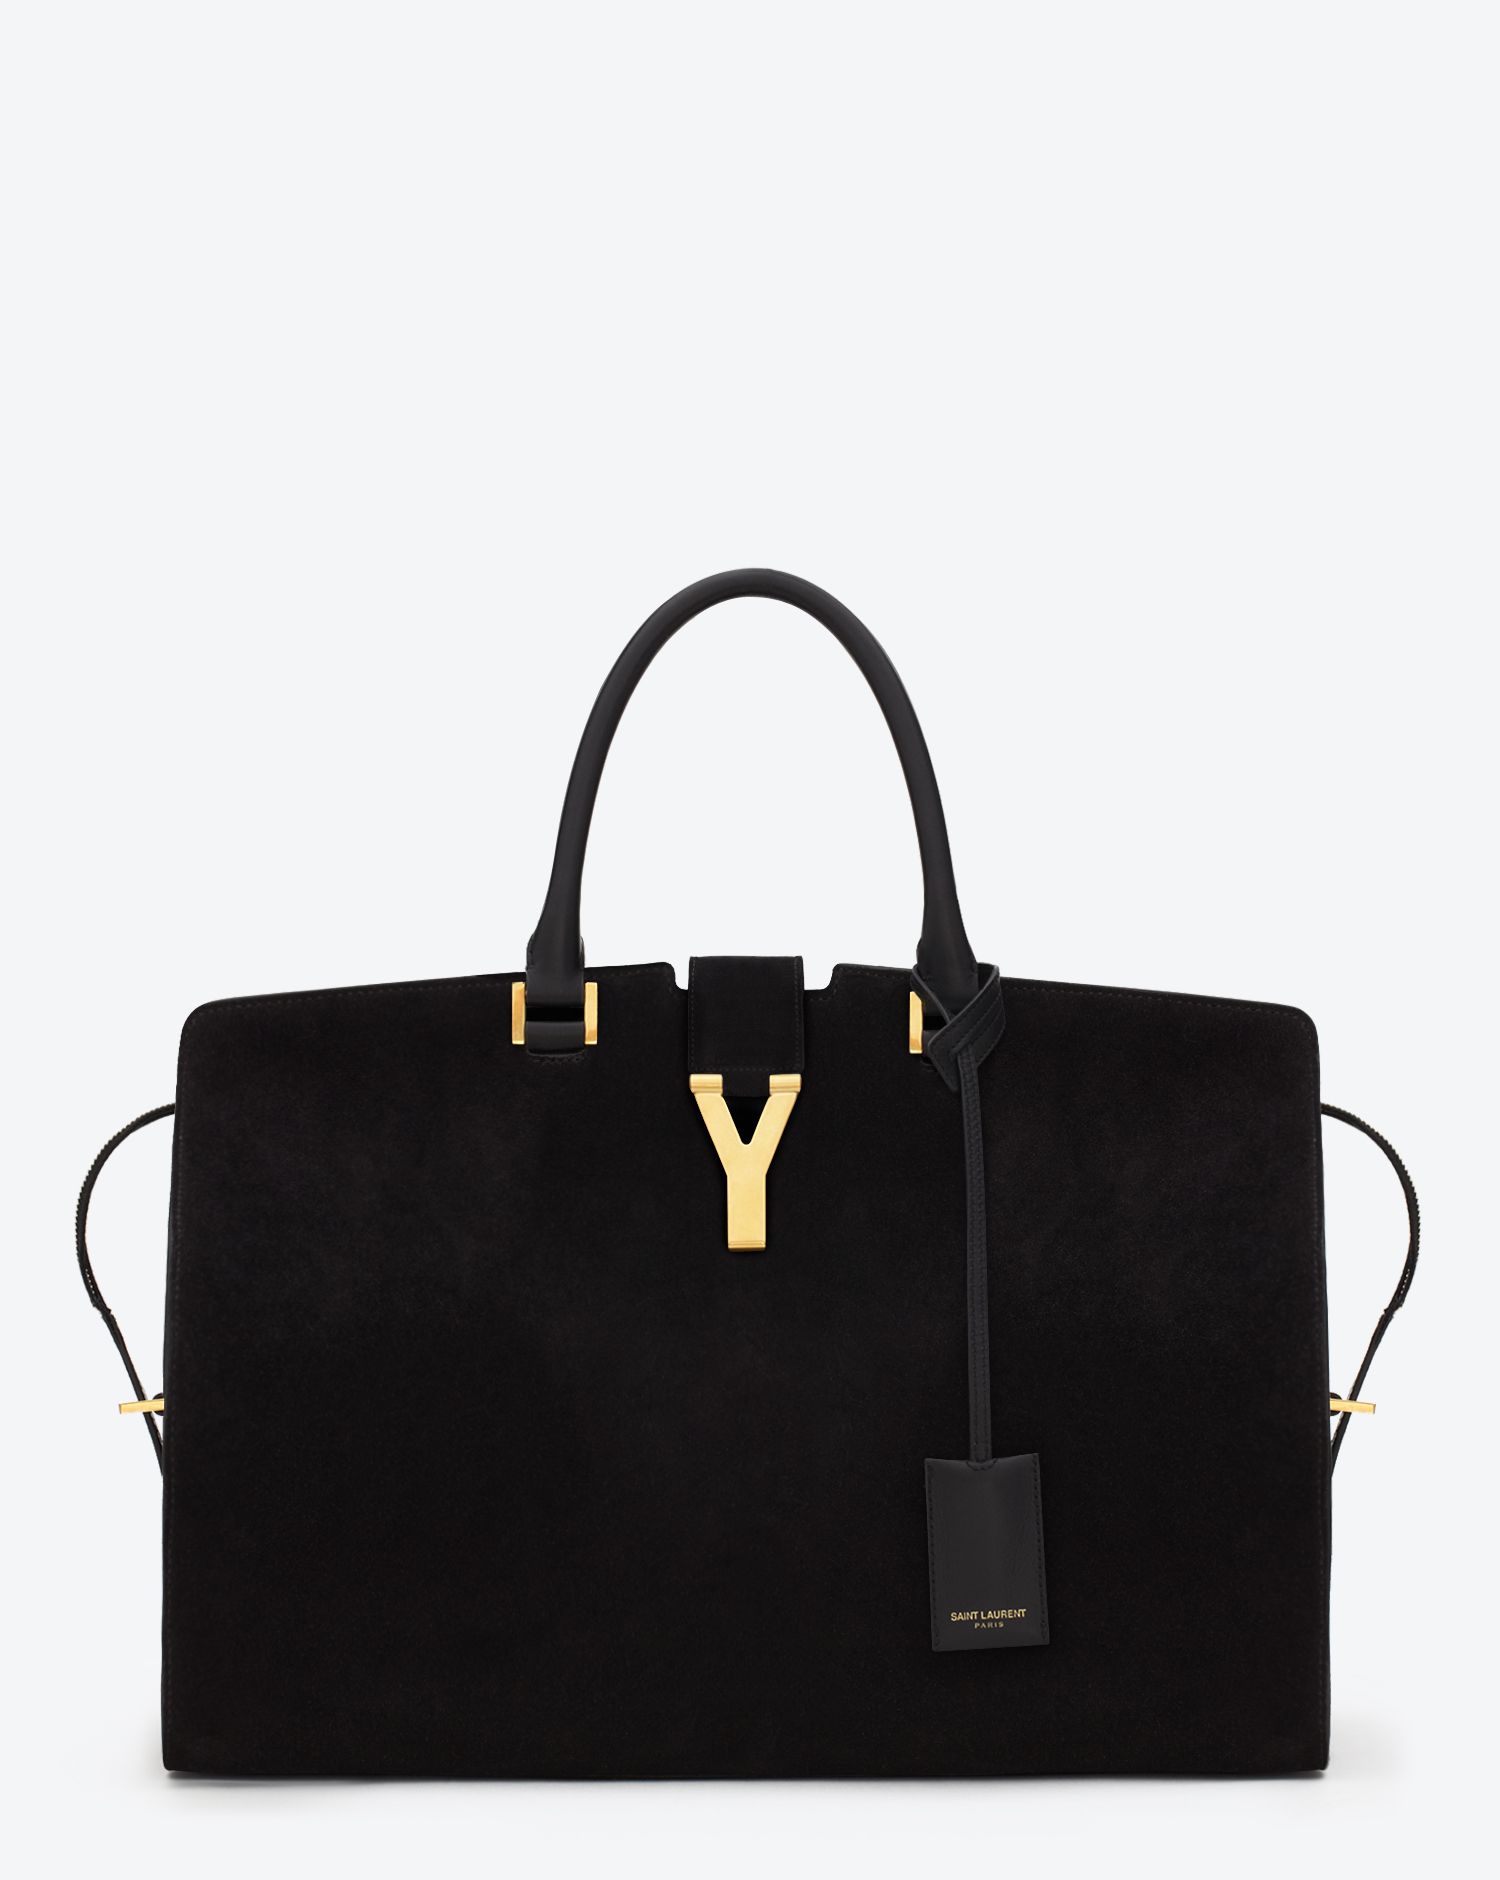 New @ysl ✨ Saint Laurent iconic bag ICARE #YSL #サンローラン